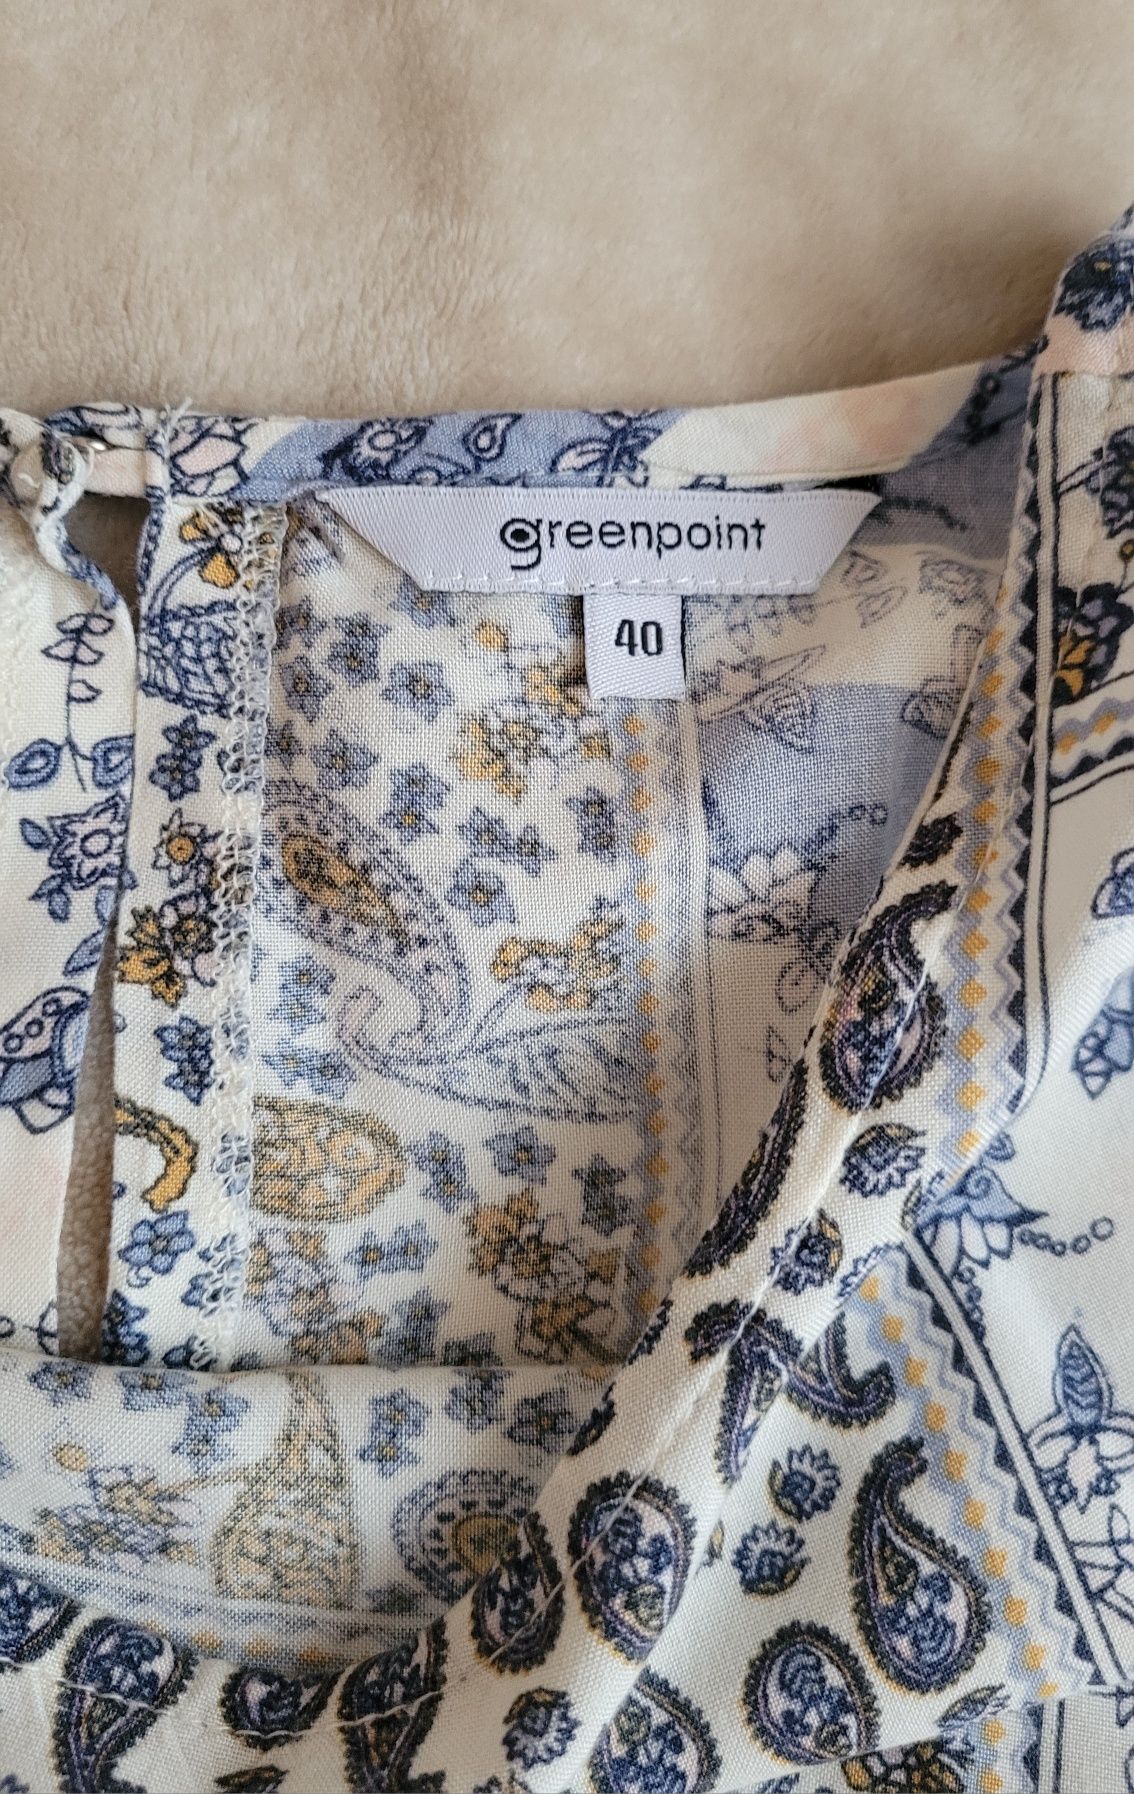 40 L Greenpoint top damska bluzka koszulka bez rękawów